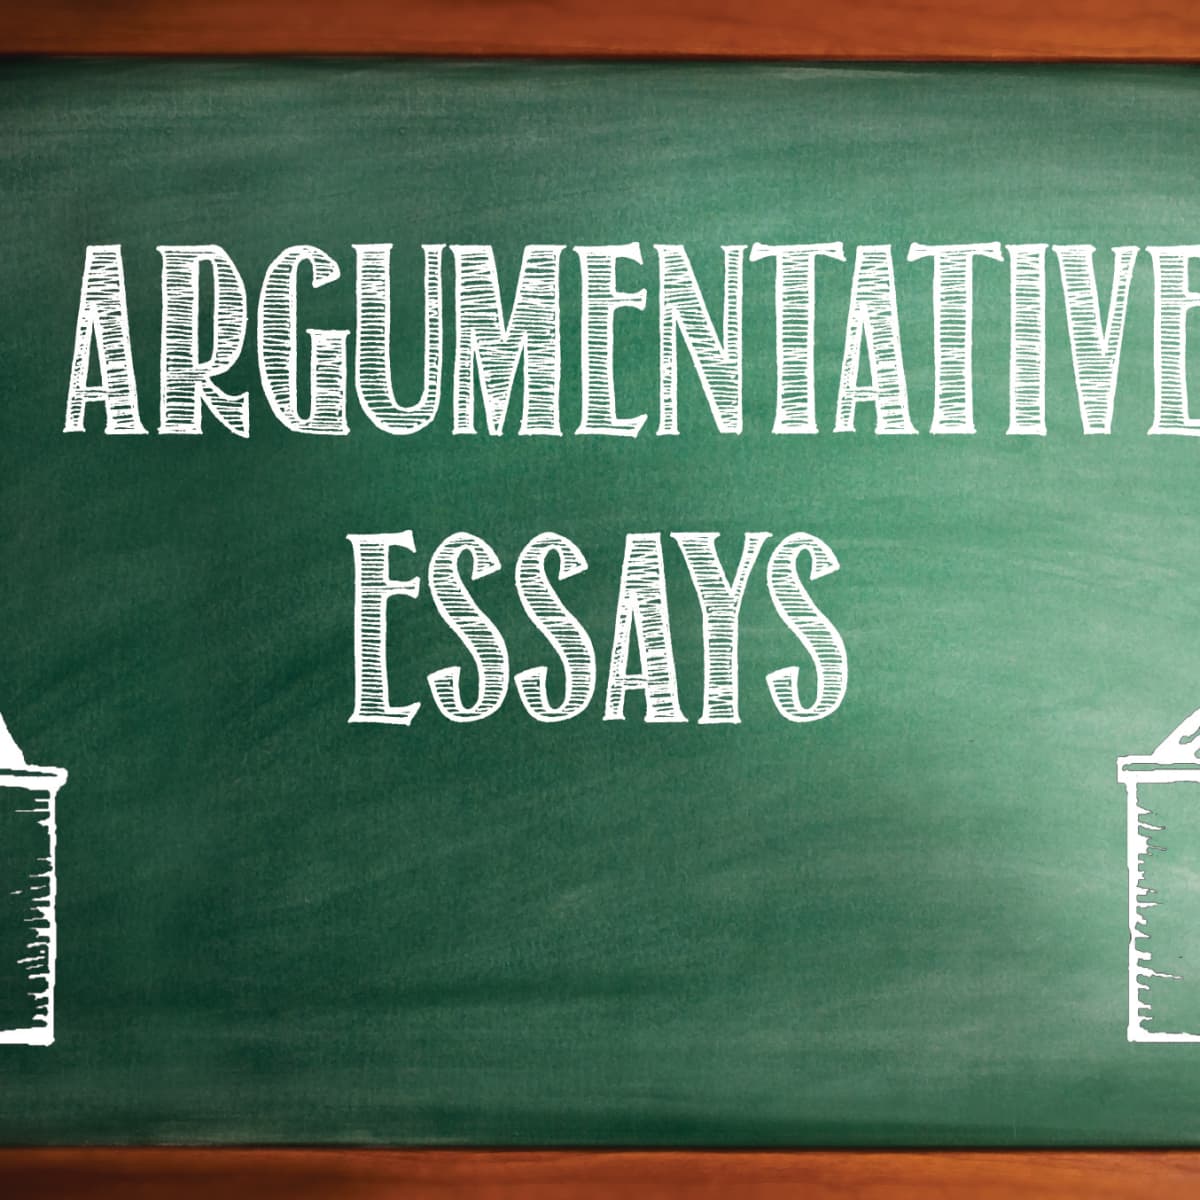 good argumentative essay topics college